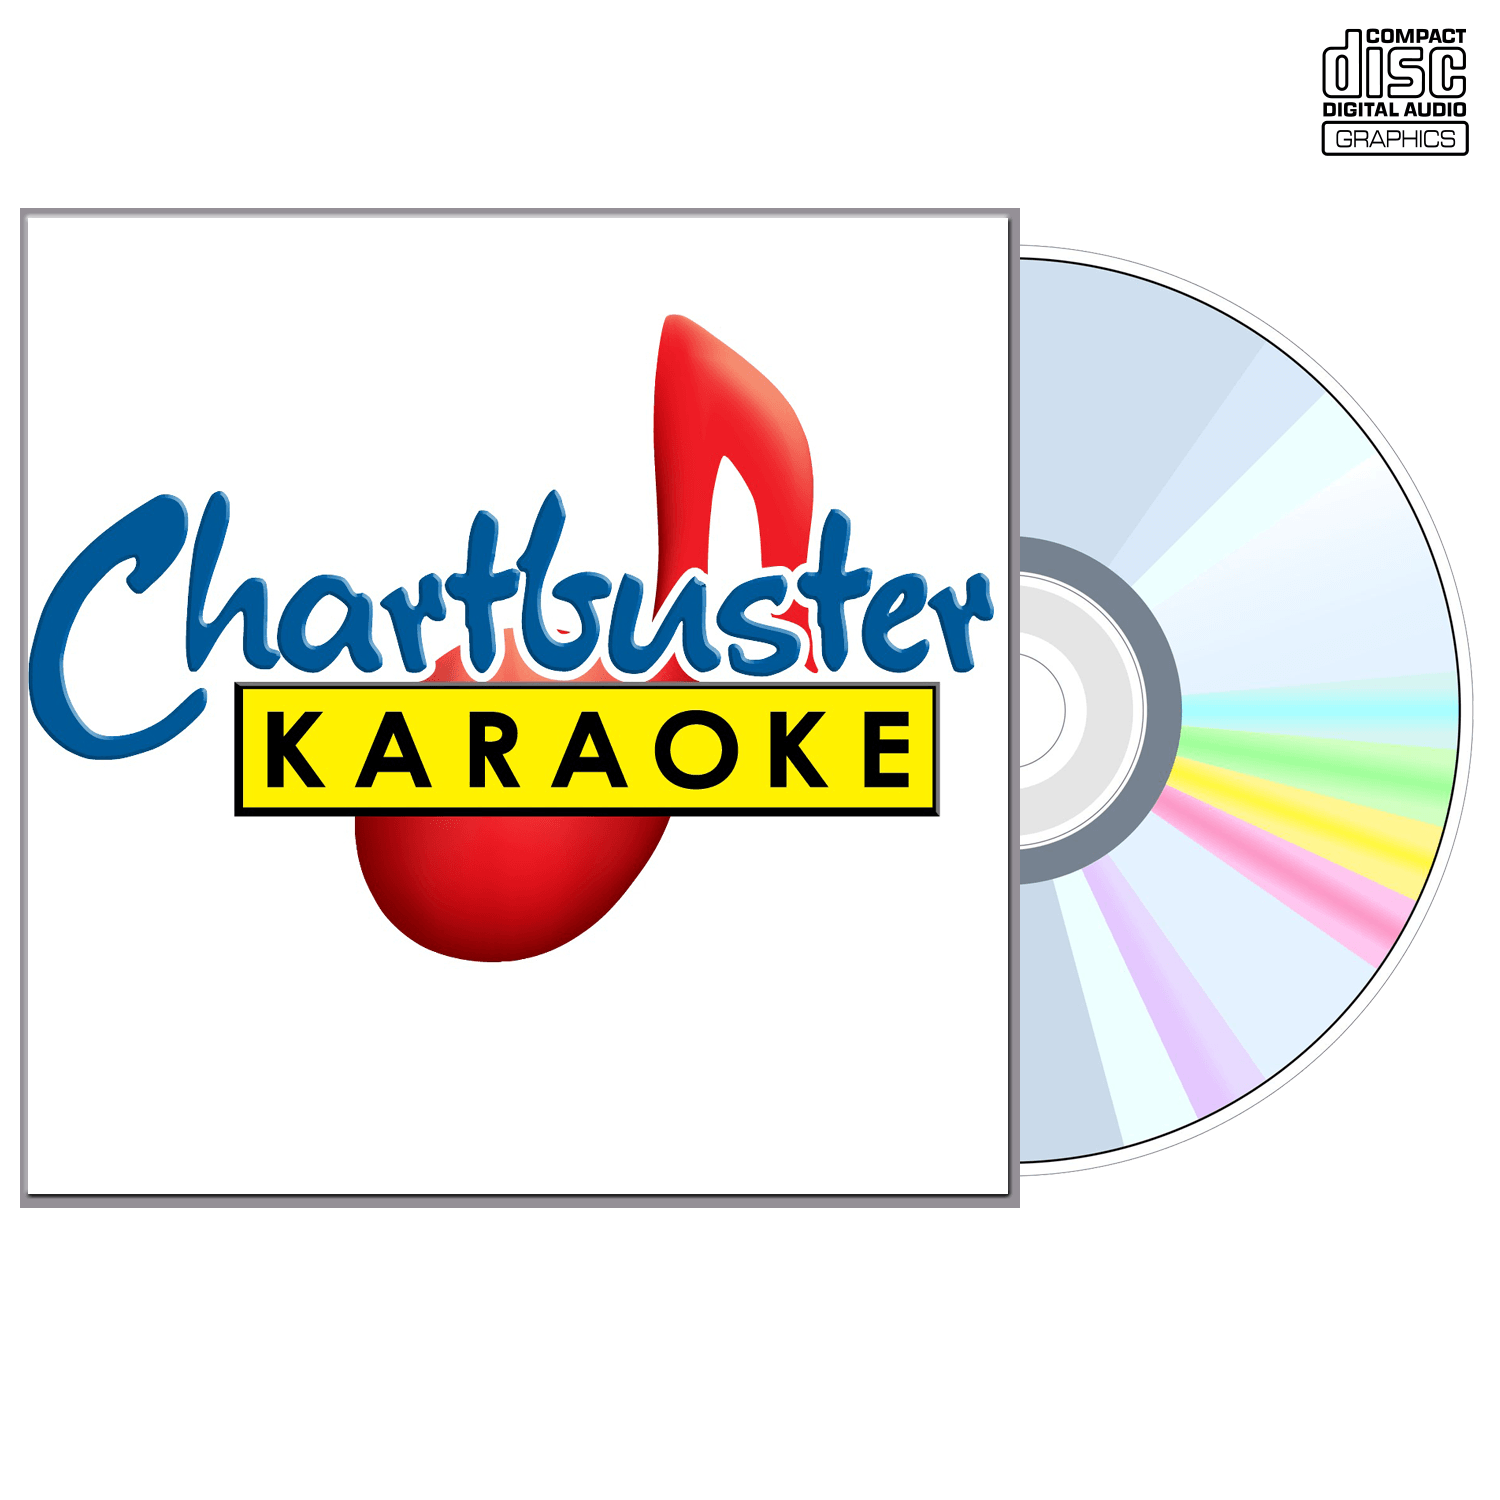 Ultimate 90's Collection - CD+G - Chartbuster Karaoke - Karaoke Home Entertainment